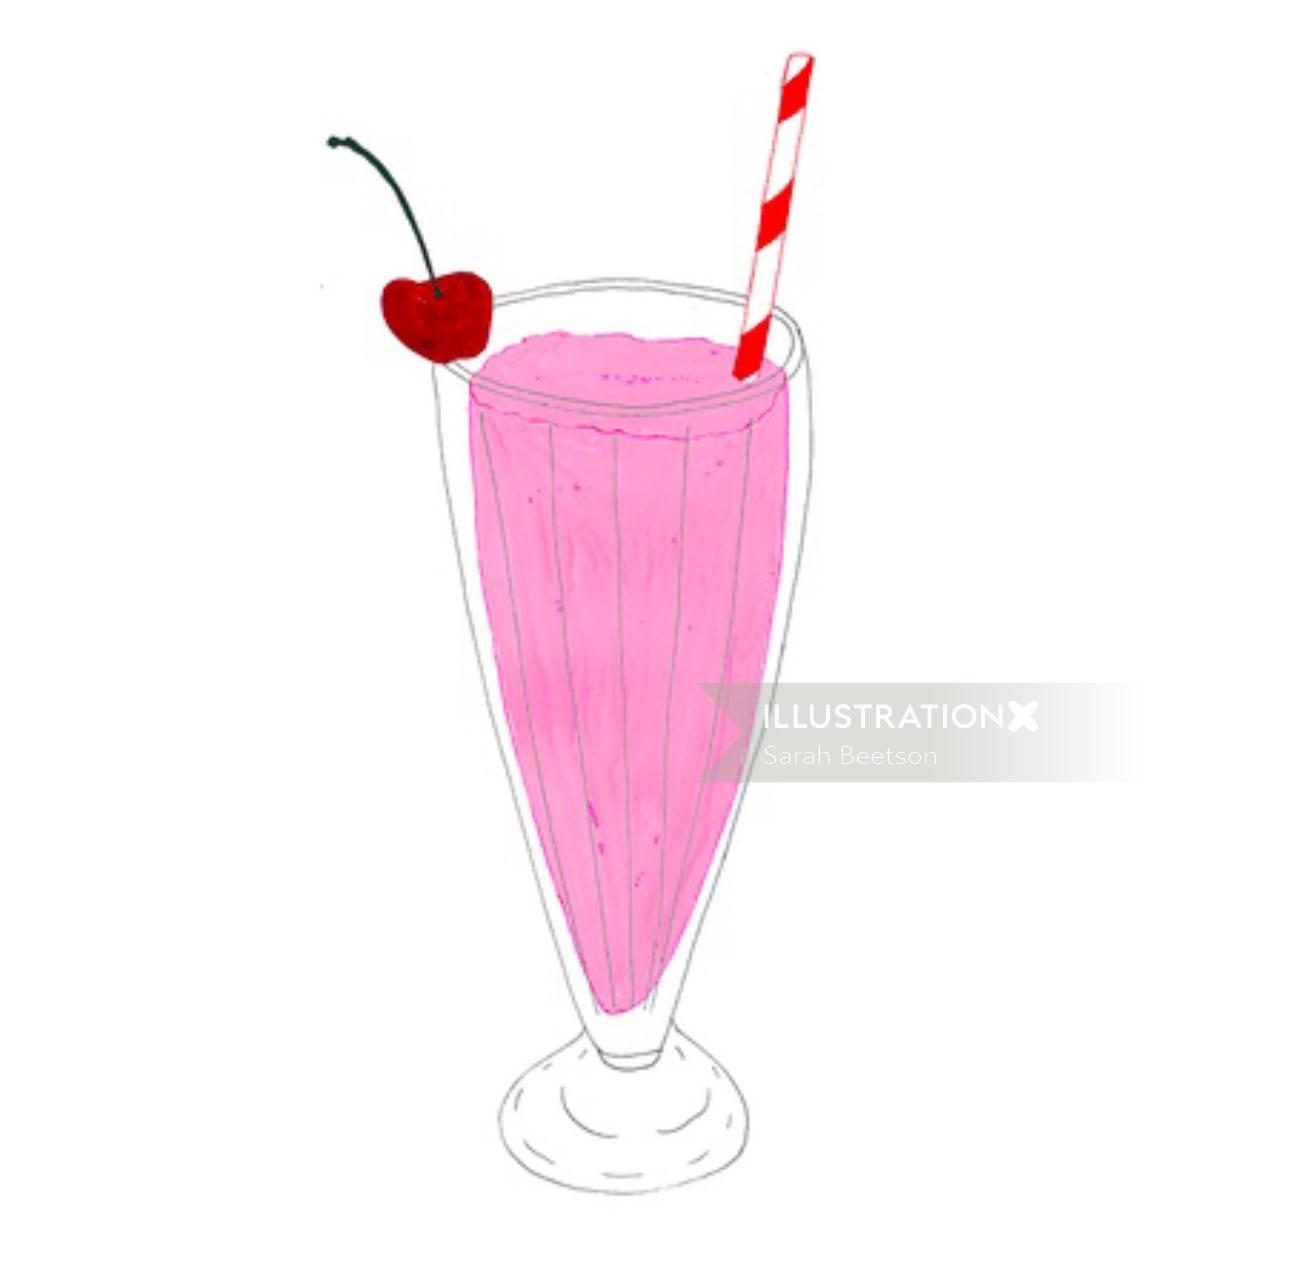 Animation of strawberry juice
